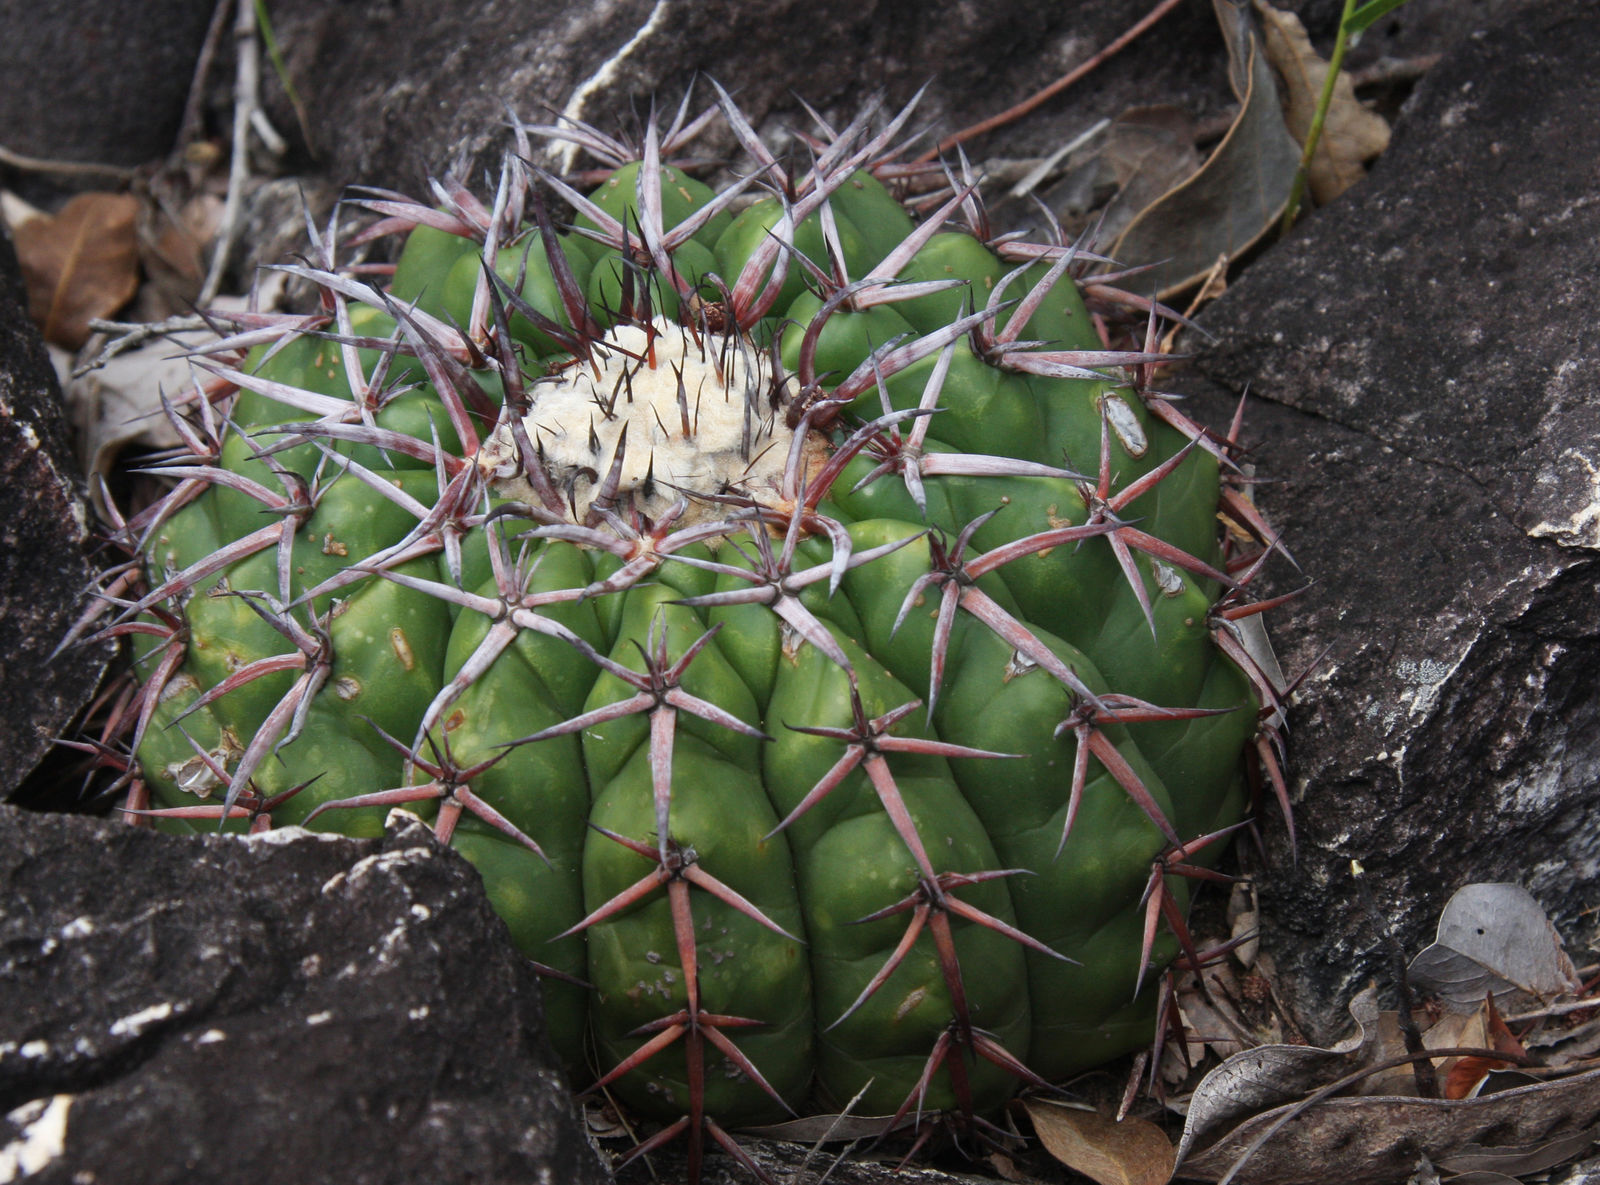 Discocactus plant